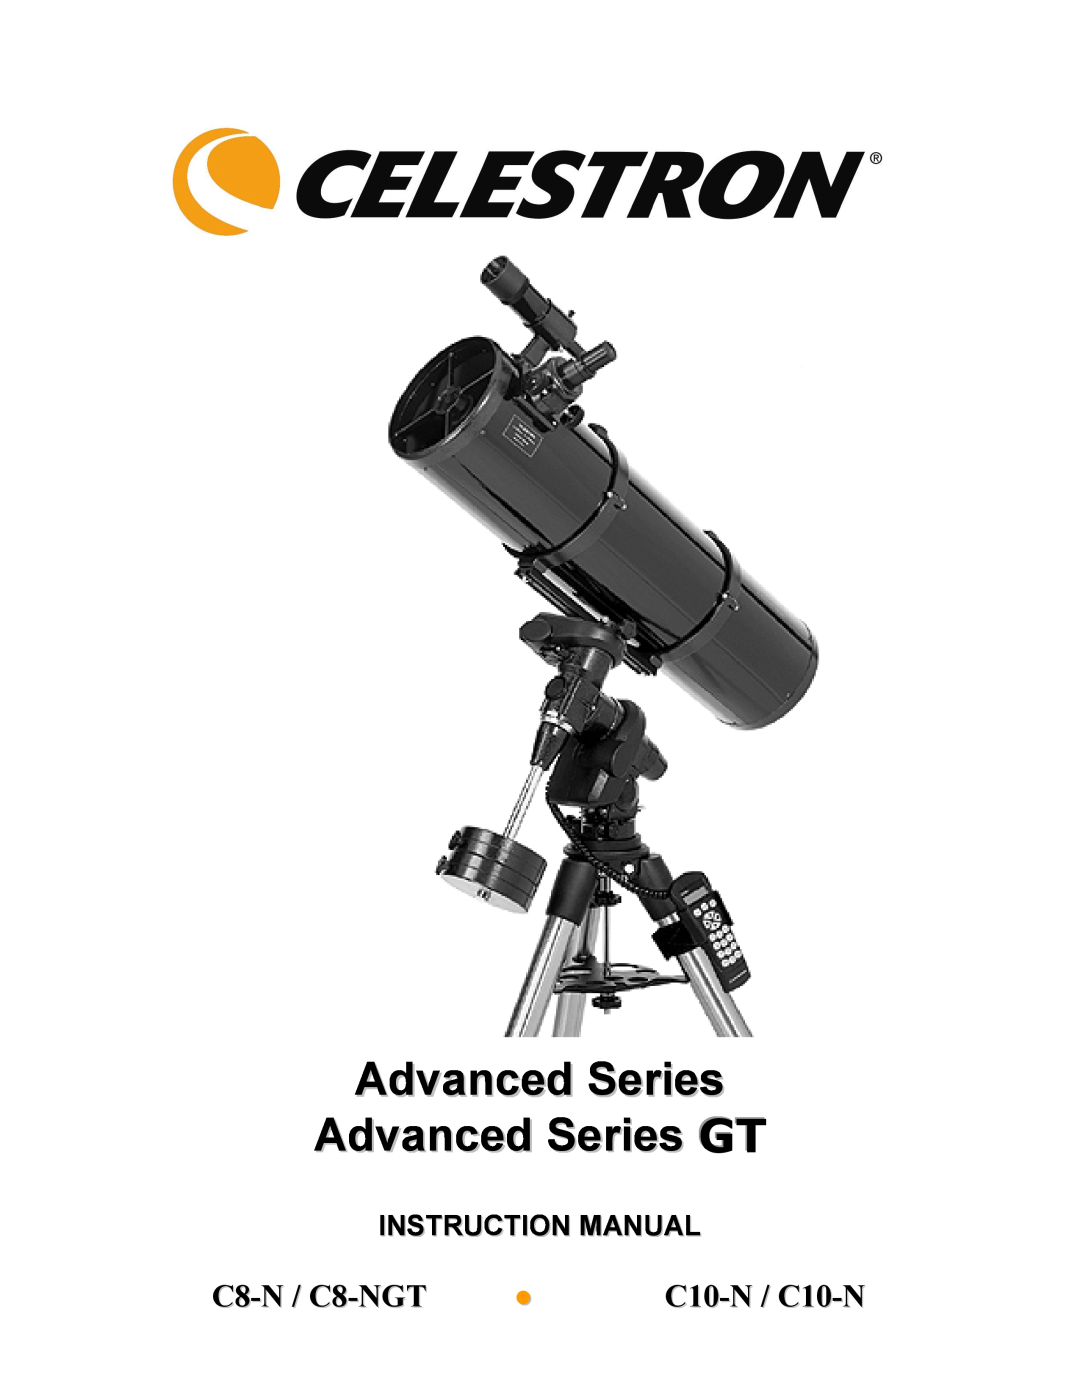 Celestron manual C8-N / C8-NGT, C10-N / C10-N, Instruction Manual, Advanced Series Advanced Series GT 